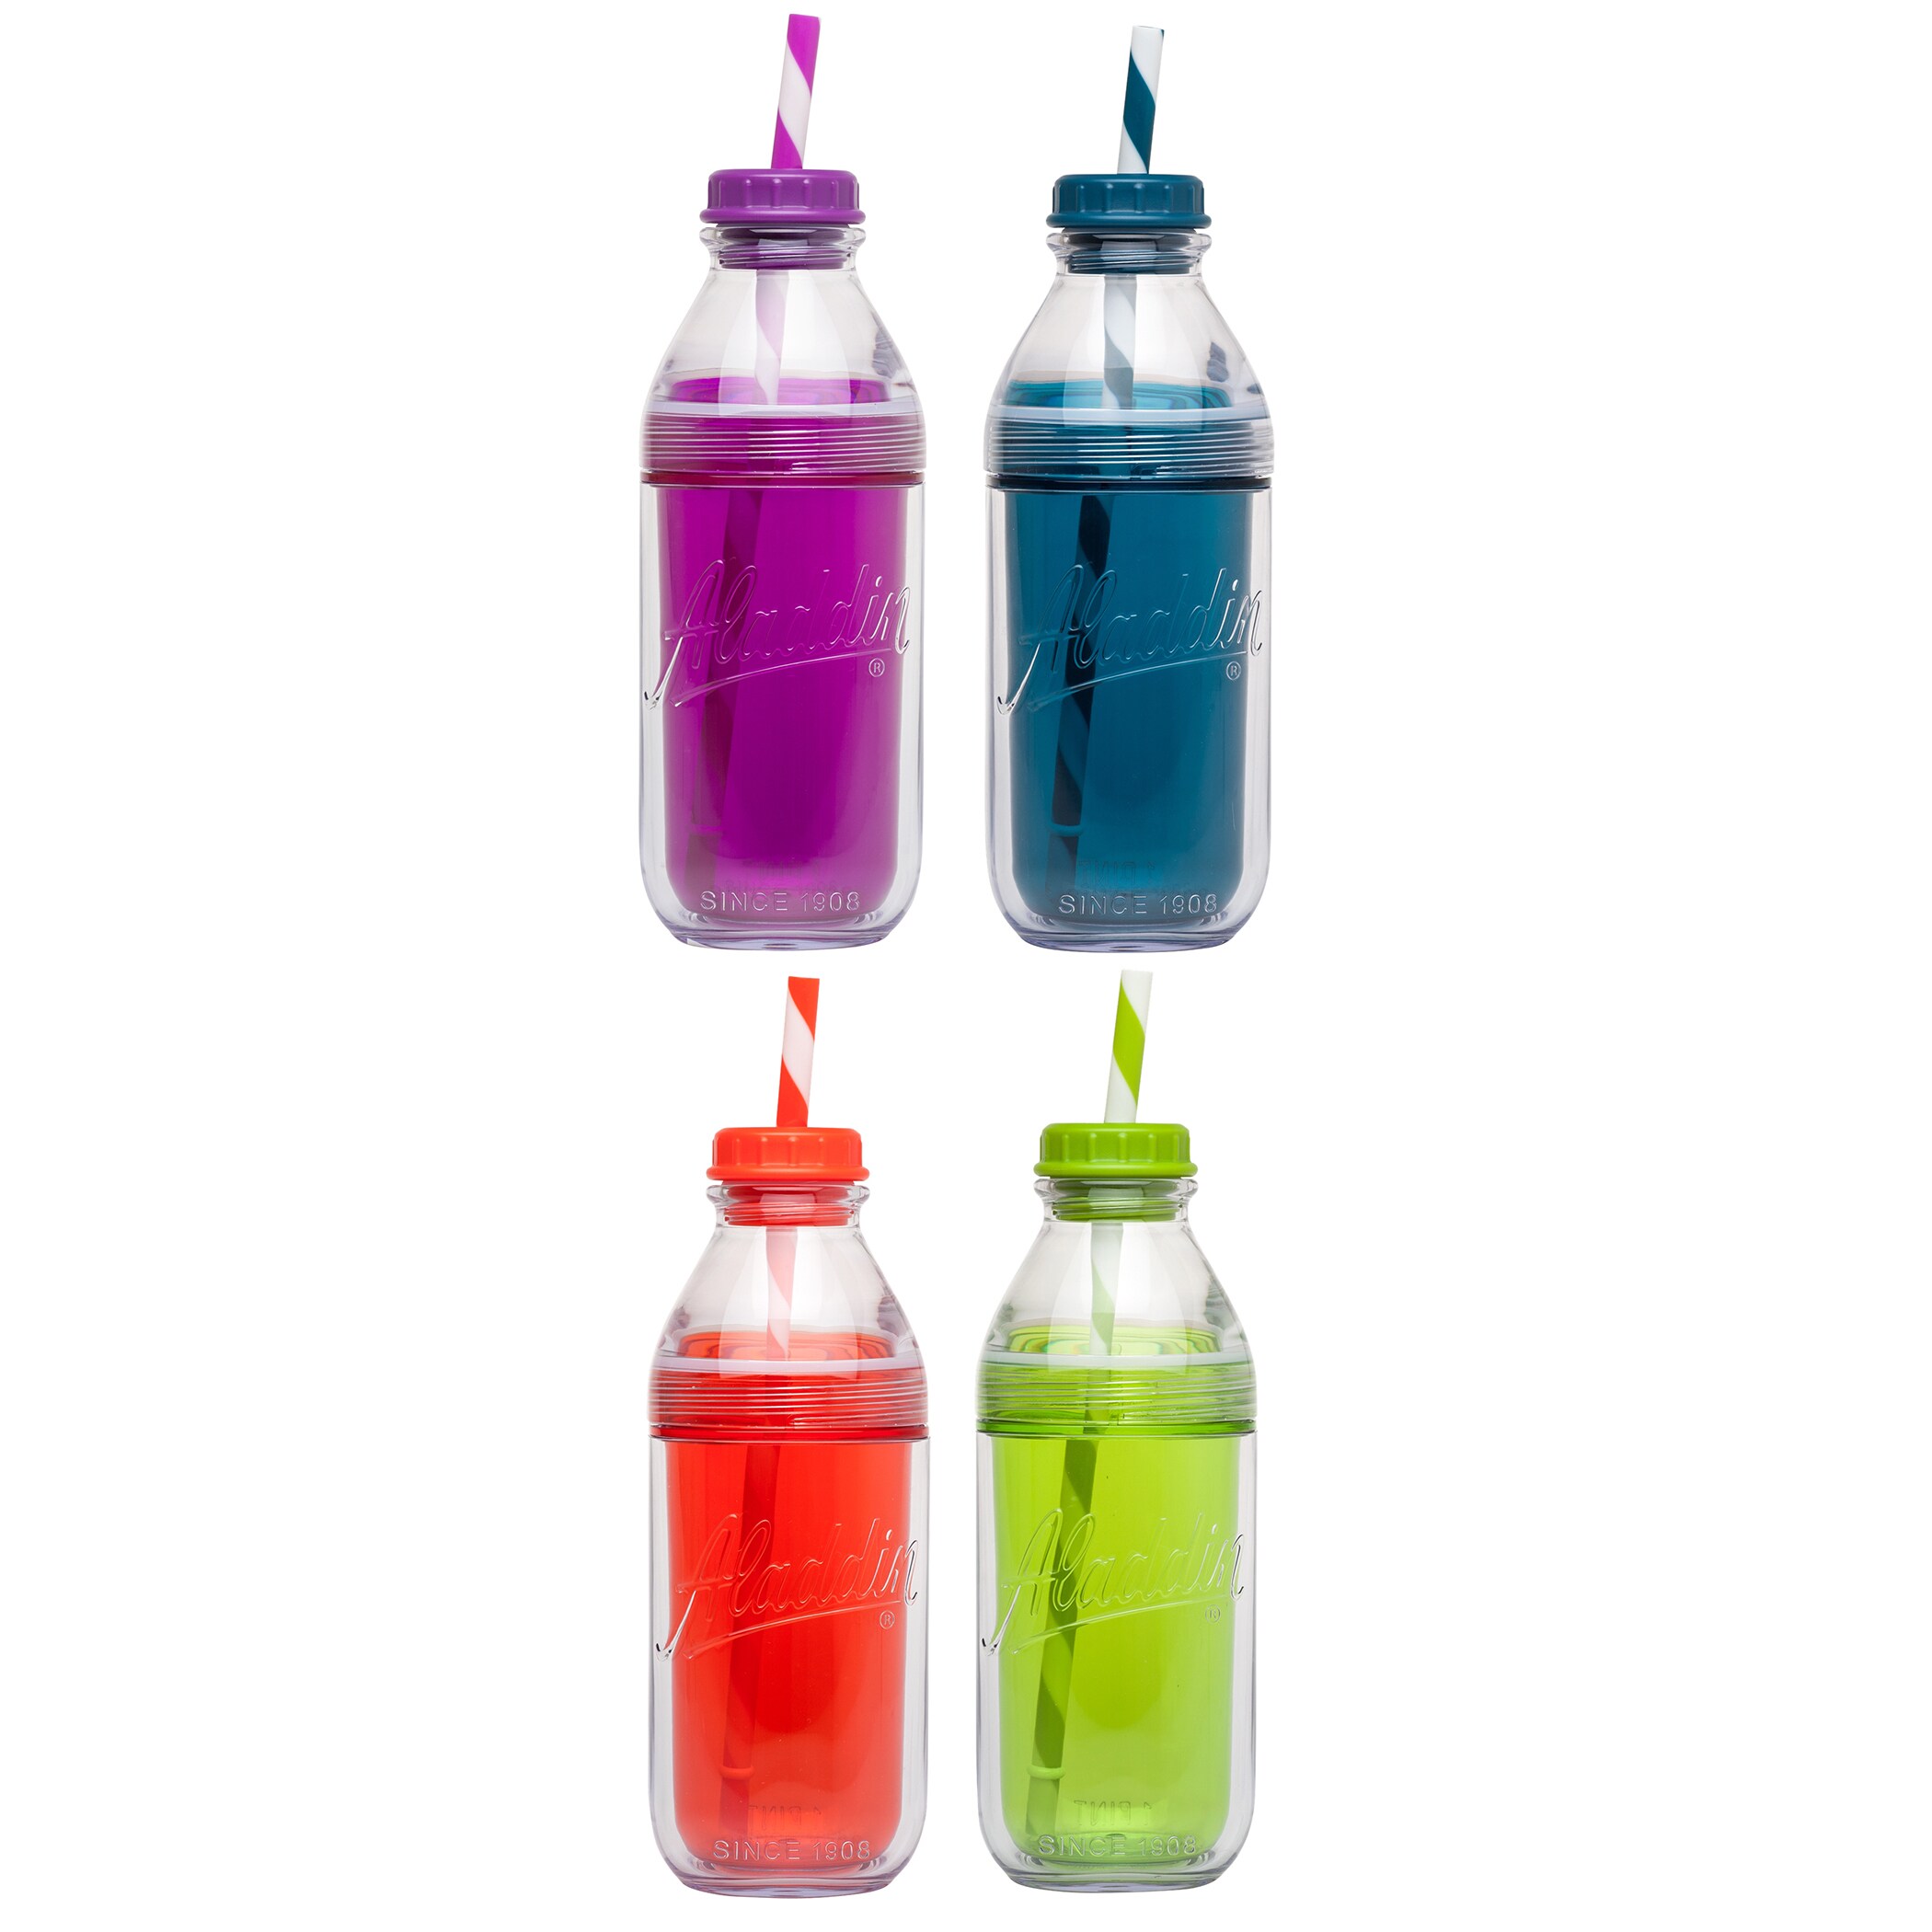 Aladdin Aladdin 6503957 18 oz Orchid Tritan Vacuum Insulated Water Bottle  BPA Free at